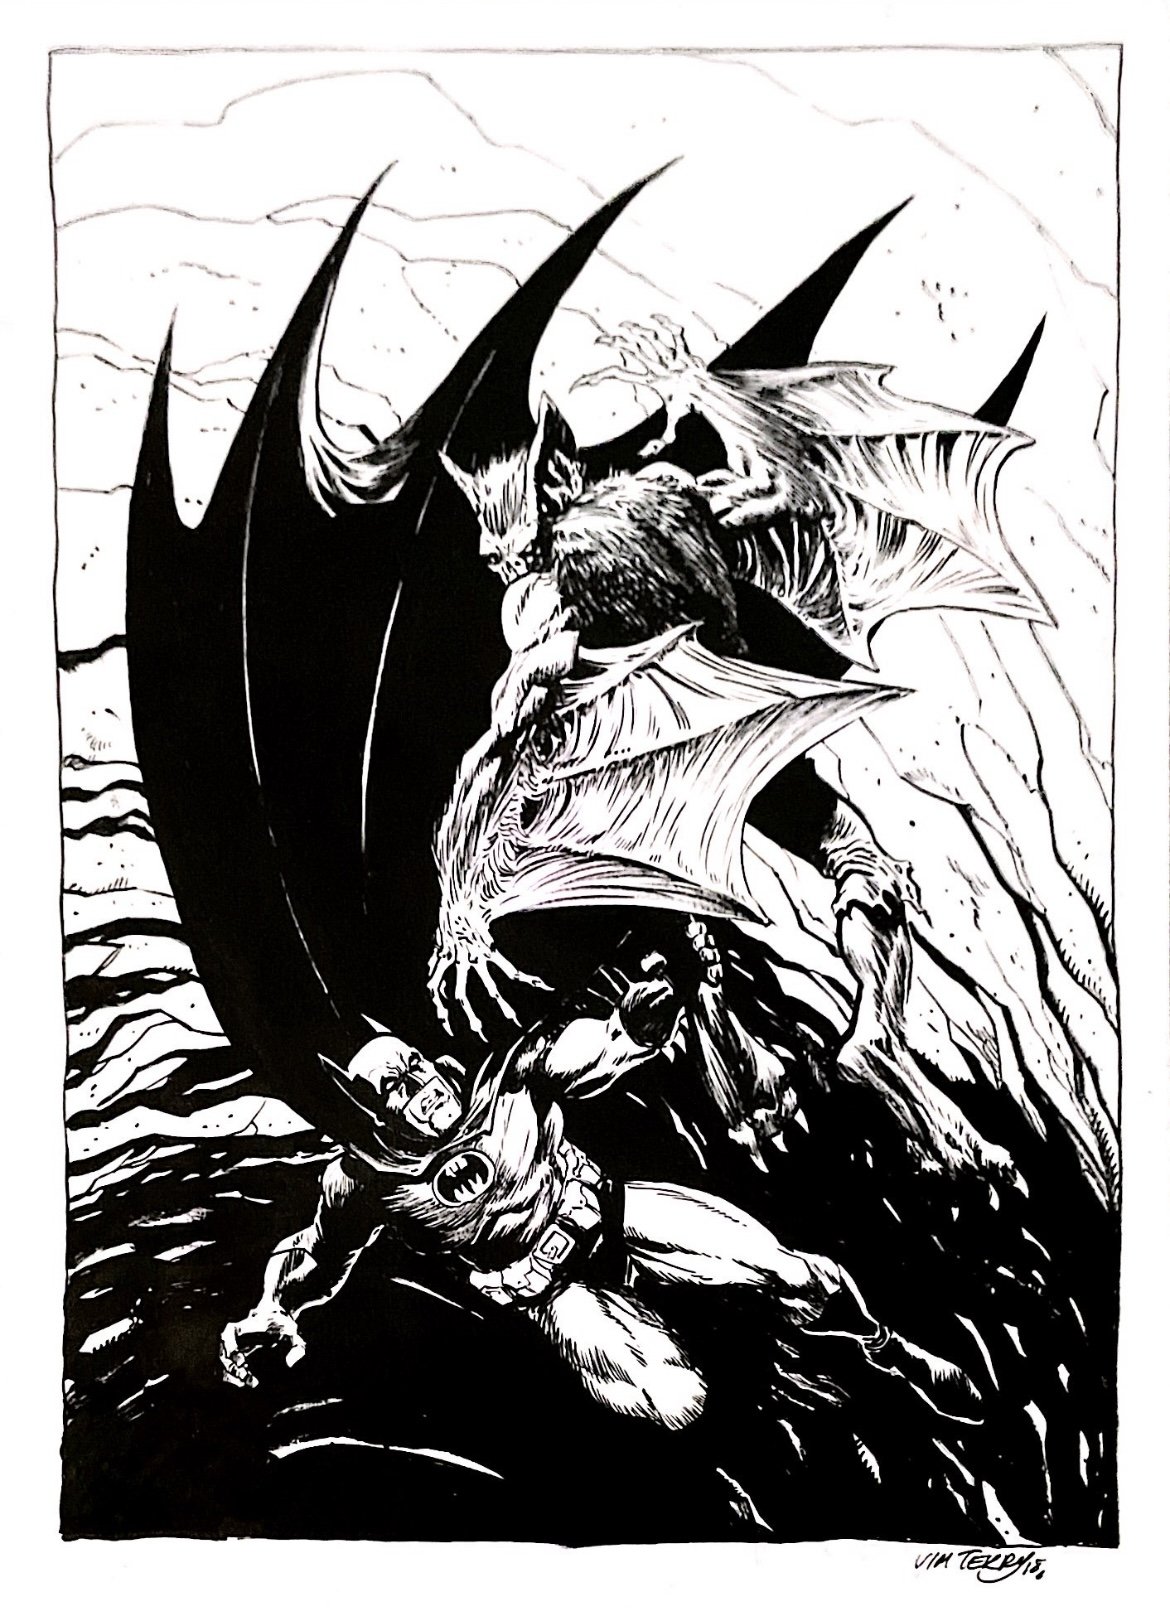 Batman vs Man-Bat by Jim Terry, in R M's Batman Comic Art Gallery Room